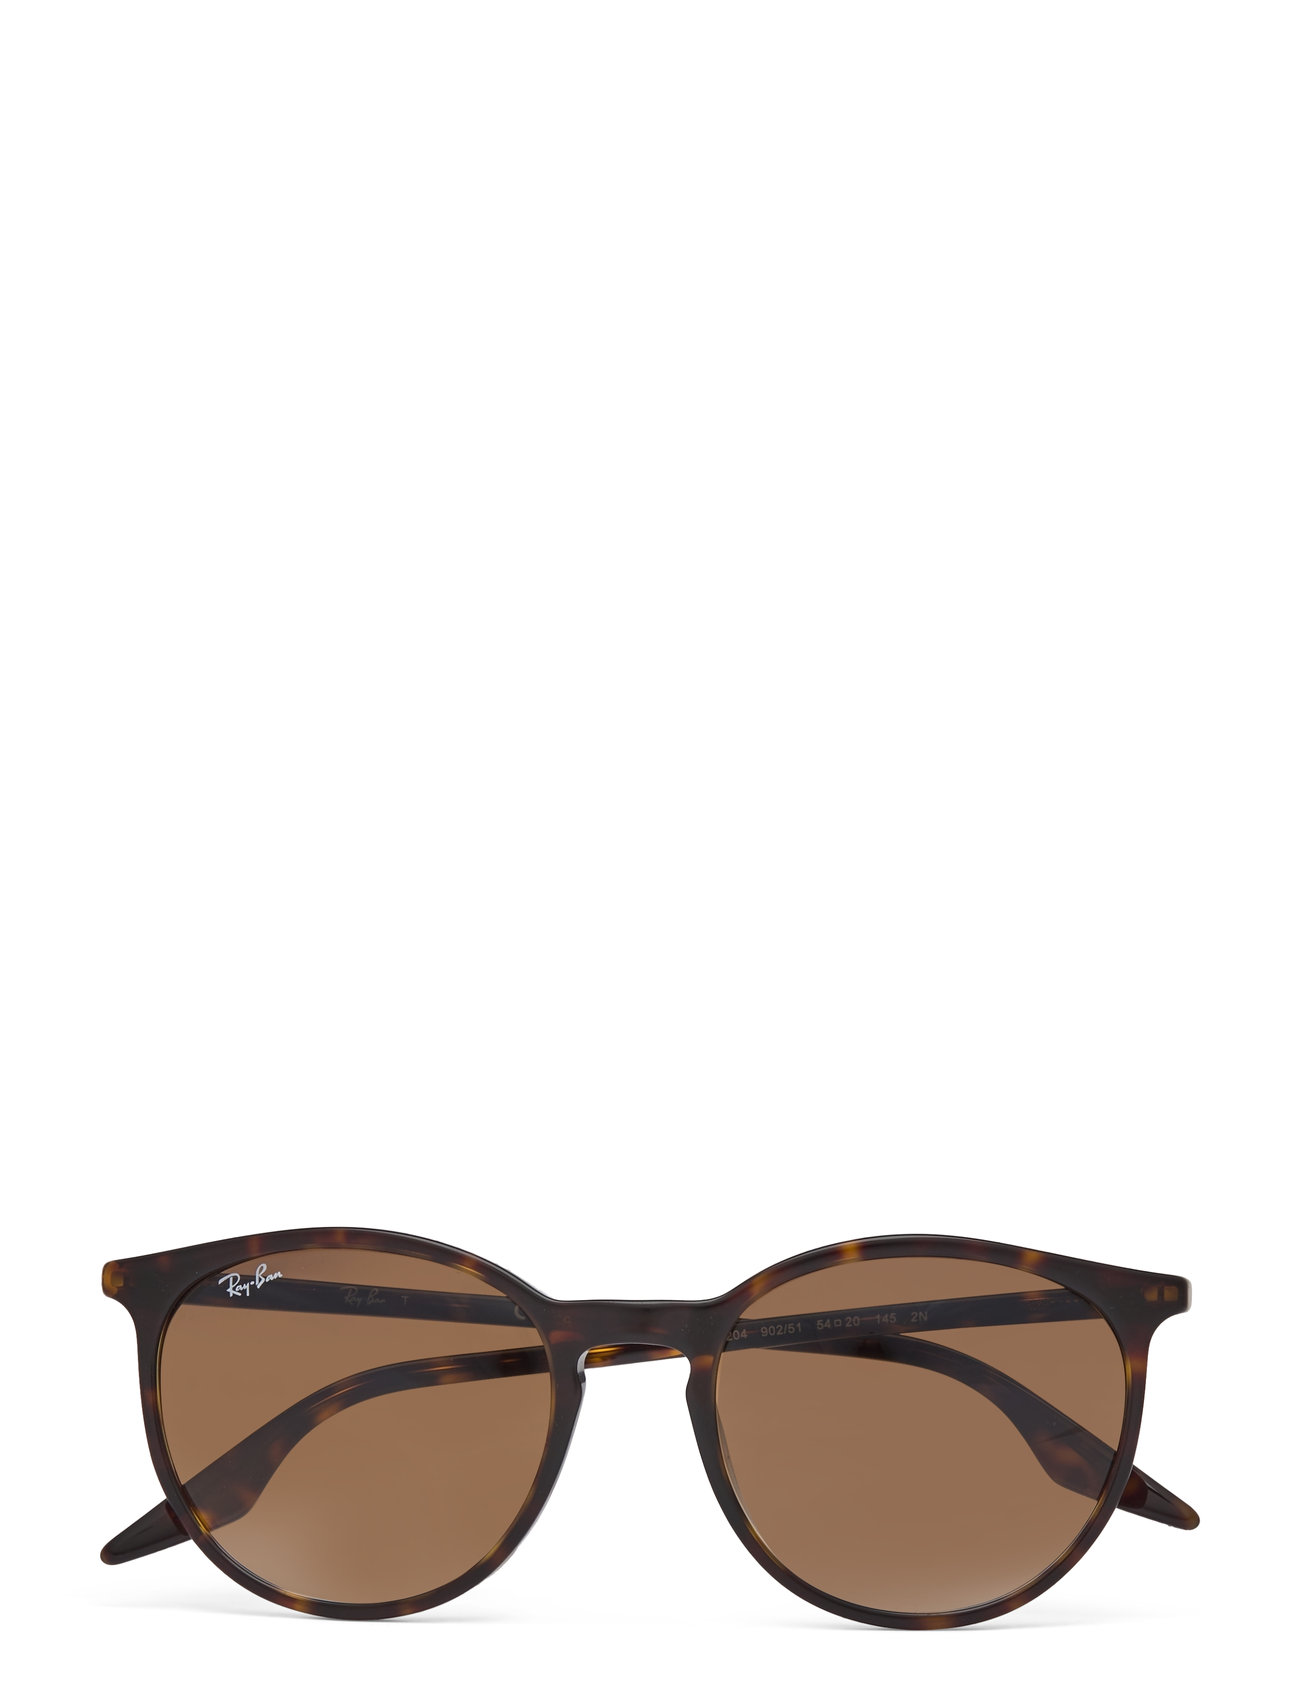 0Rb2204 54 902/51 Designers Sunglasses D-frame- Wayfarer Sunglasses Brown Ray-Ban